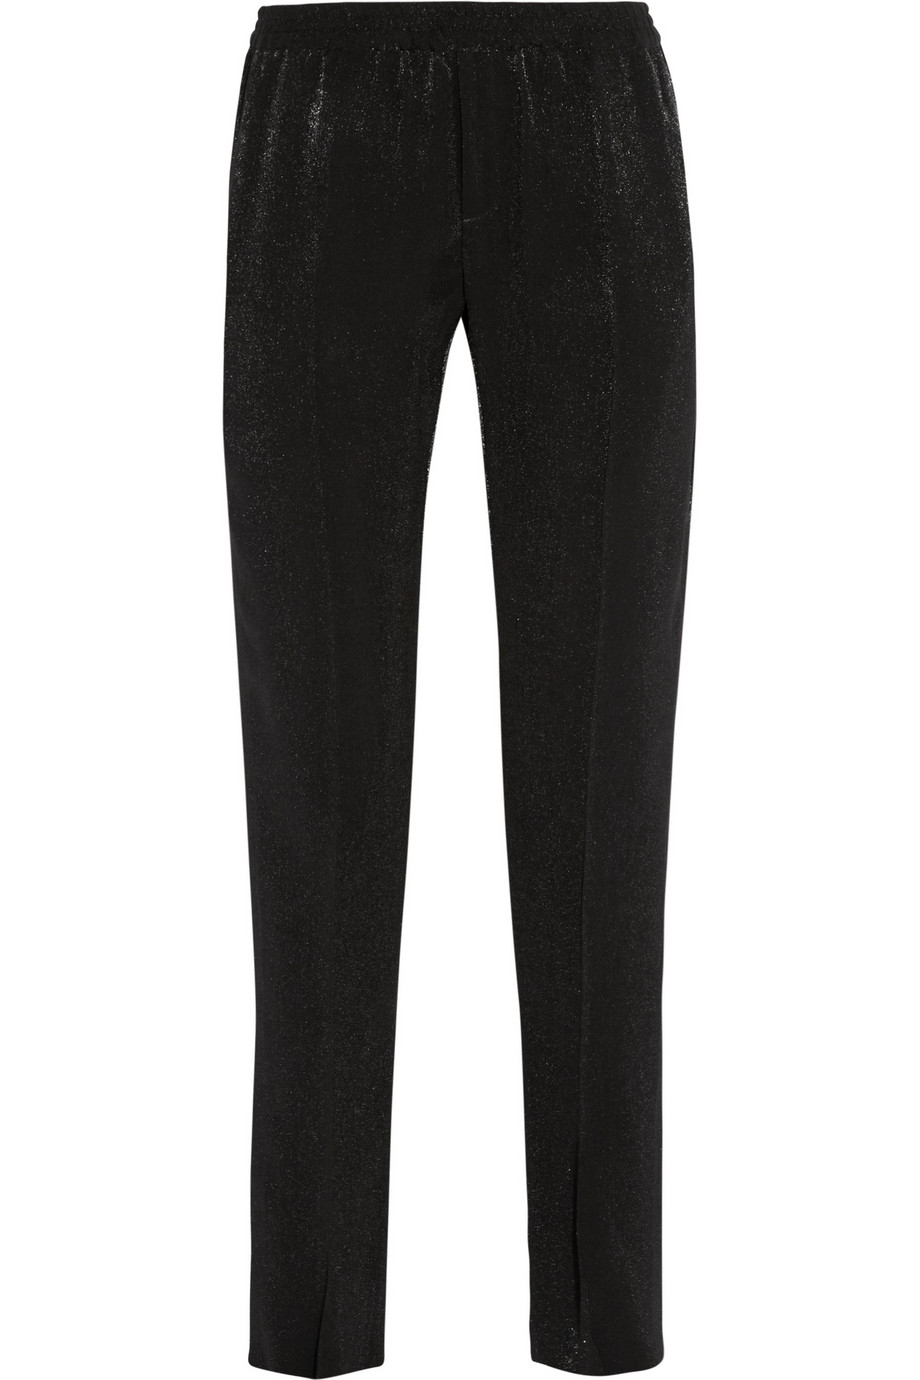 Lyst - Calvin Klein Satin-Crepe Tapered Pants in Black